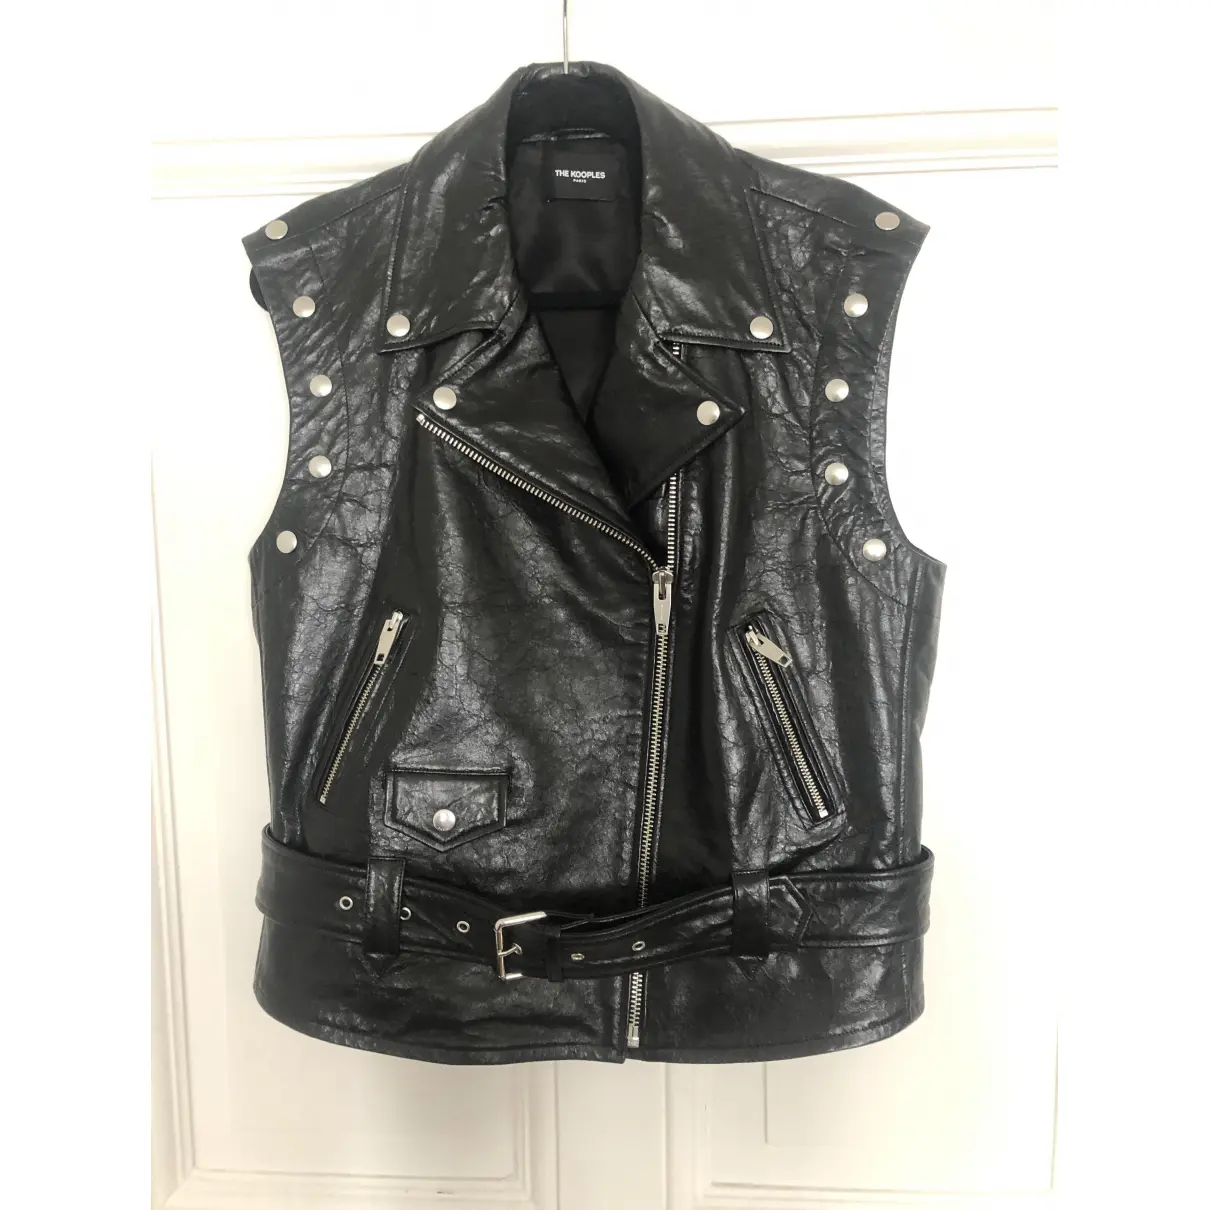 Buy The Kooples Spring Summer 2020 leather biker jacket online